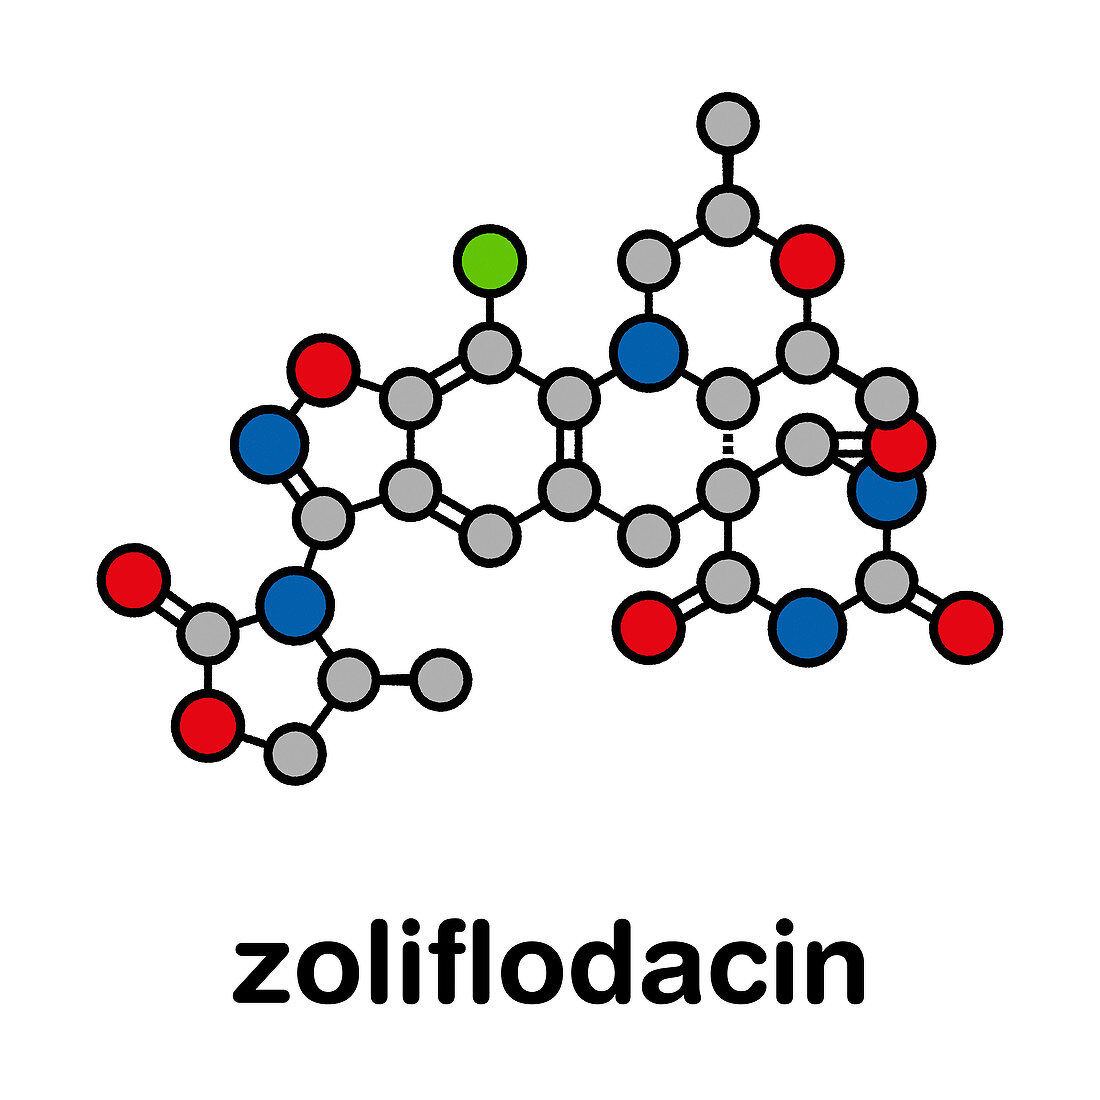 Zoliflodacin antibiotic drug molecule